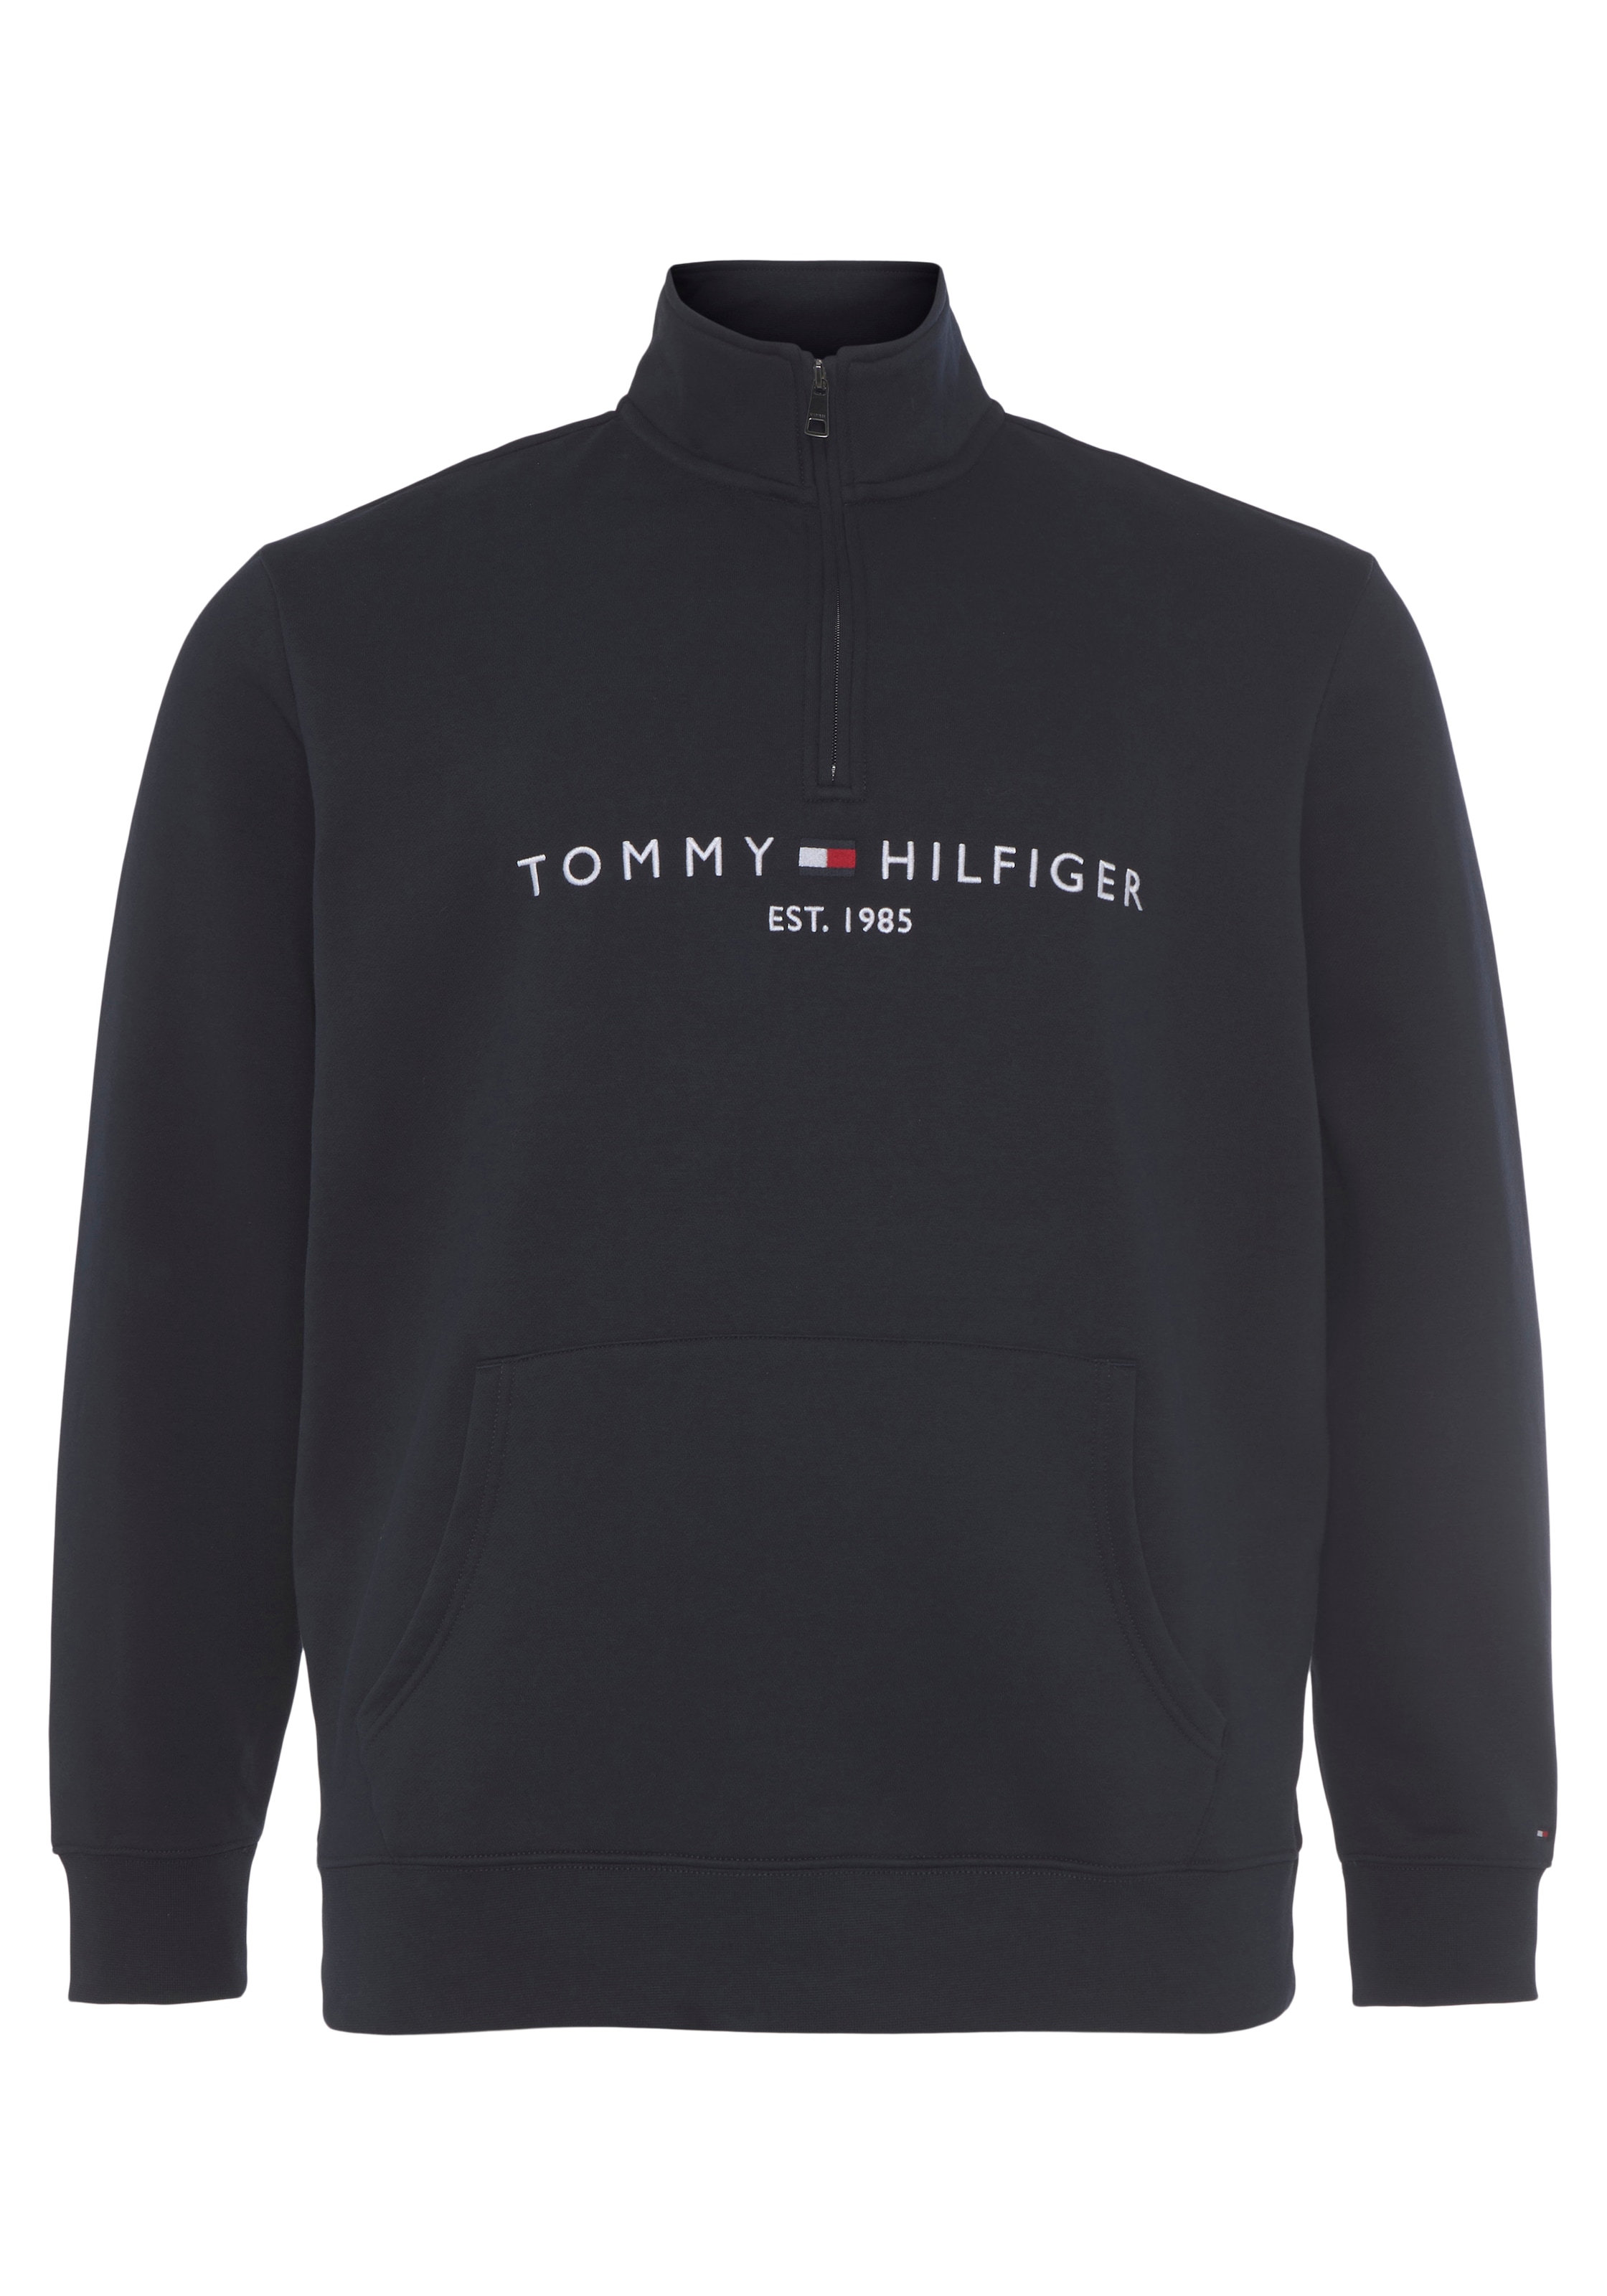 & bei LOGO Sweatshirt OTTO »BT-TOMMY Hilfiger Tall kaufen online MOCKNECK-B« Big Tommy